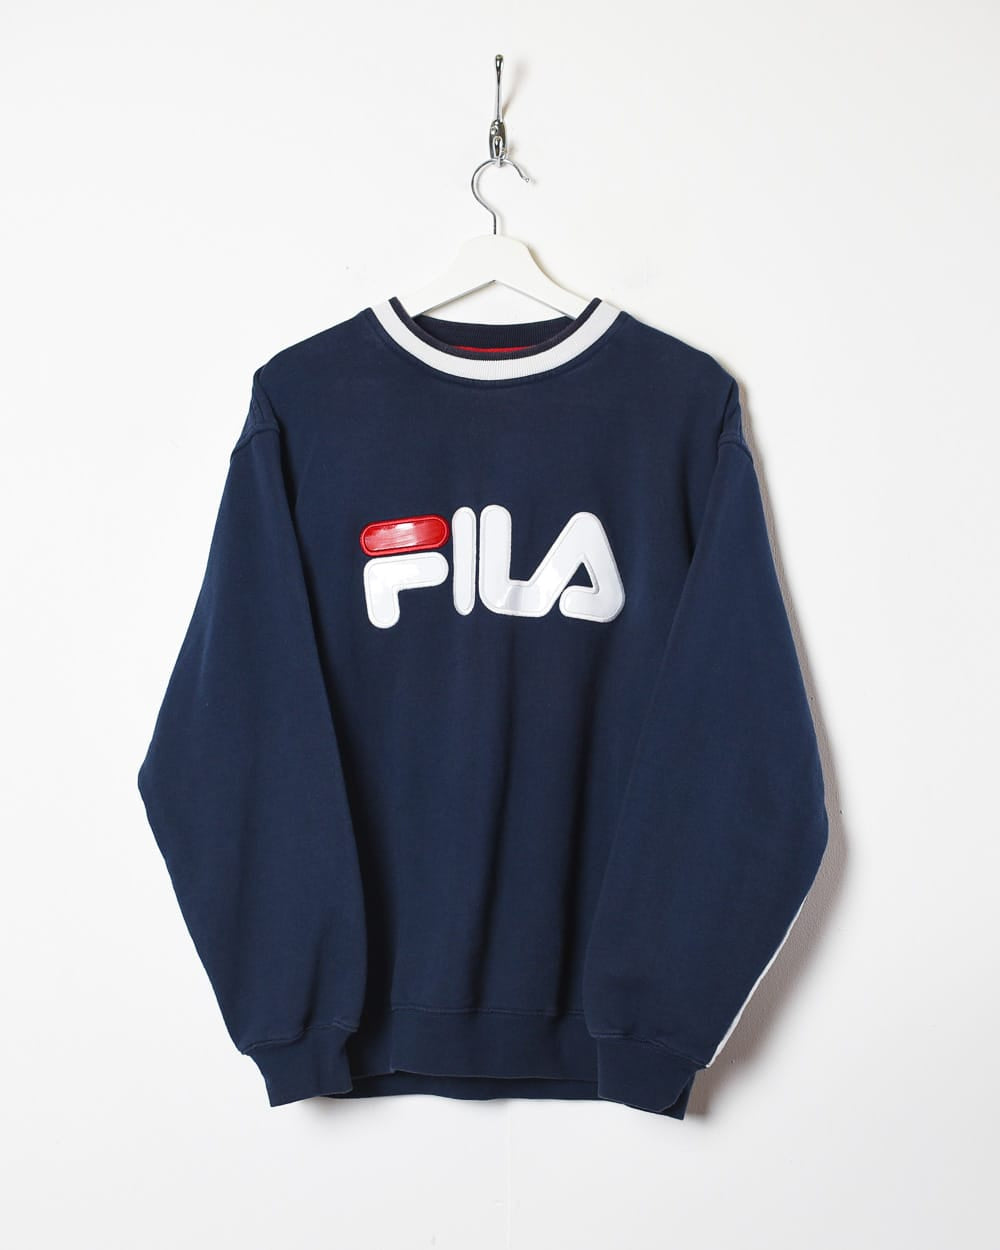 Navy Fila Sweatshirt - Large